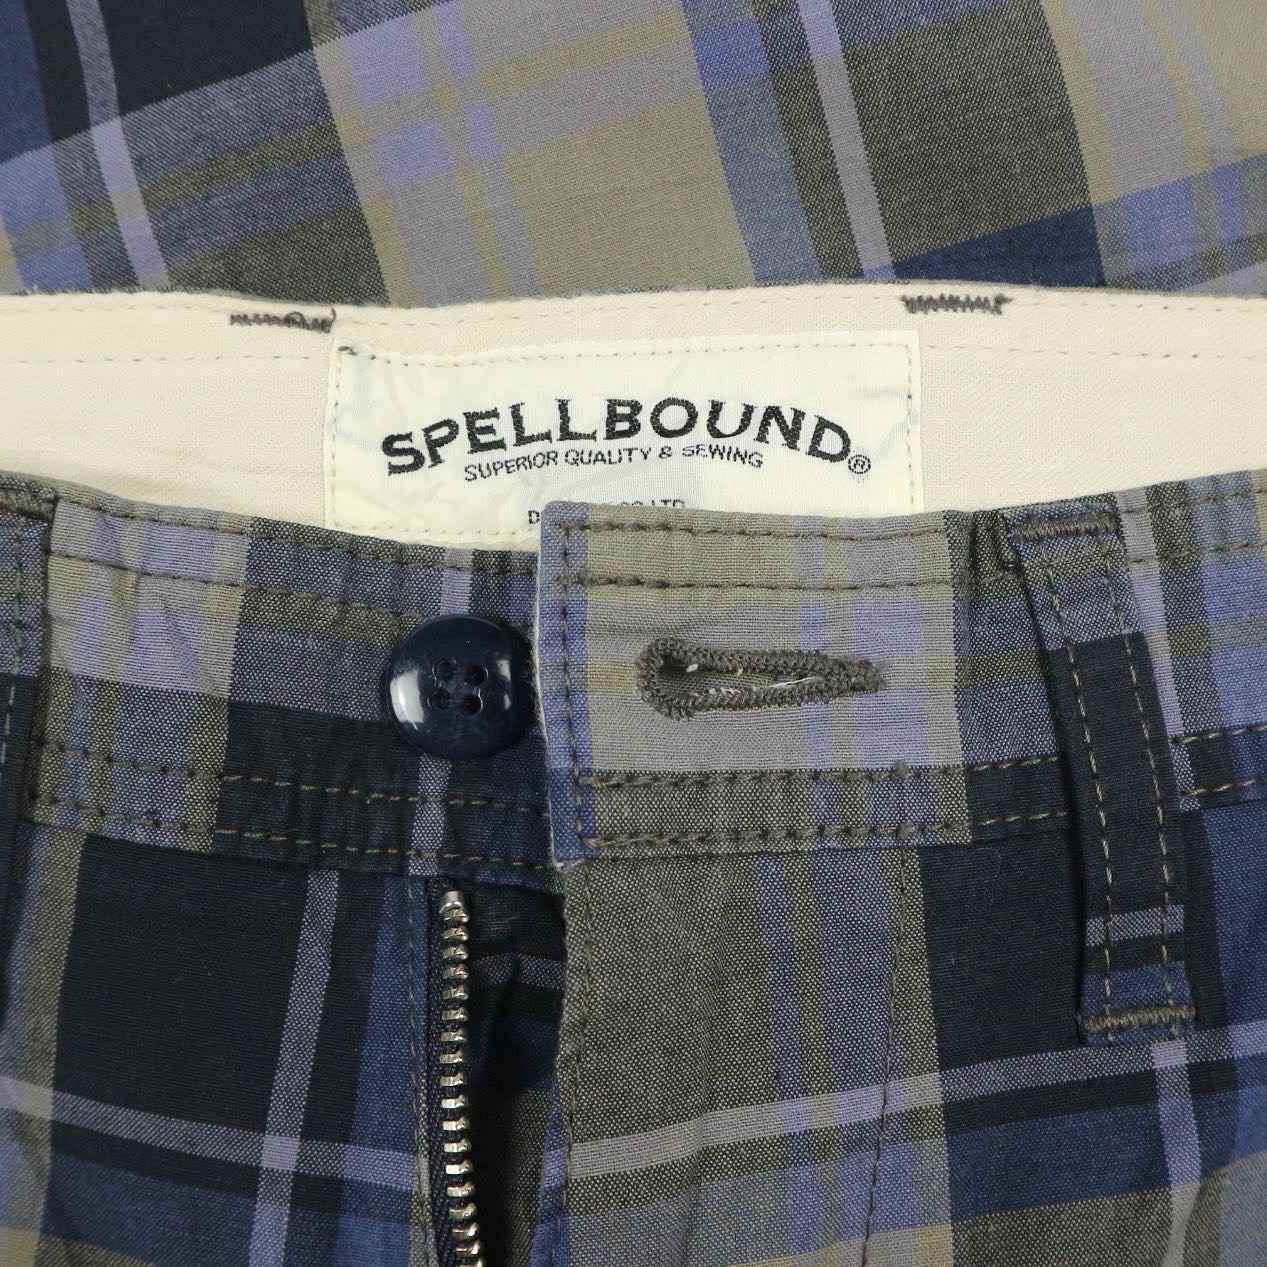 Spellbound Japan Bootcut Pants Size 30